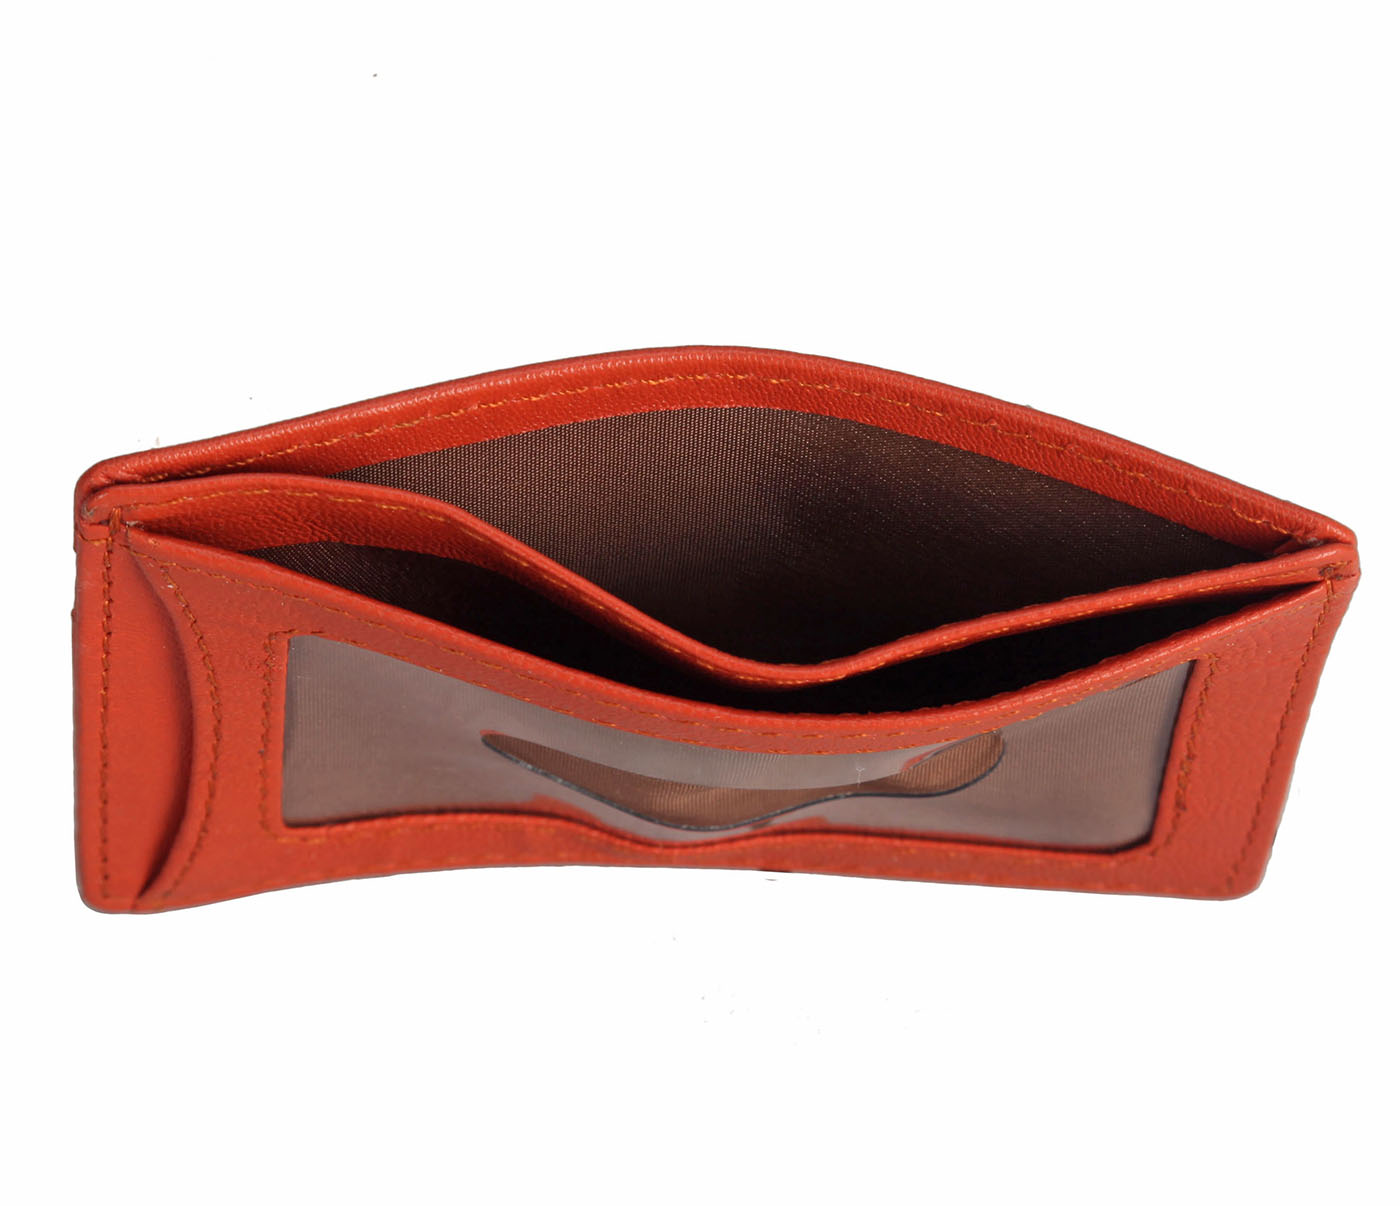 Card Case--Credit card holder with transparent slot in Genuine leather - Orange